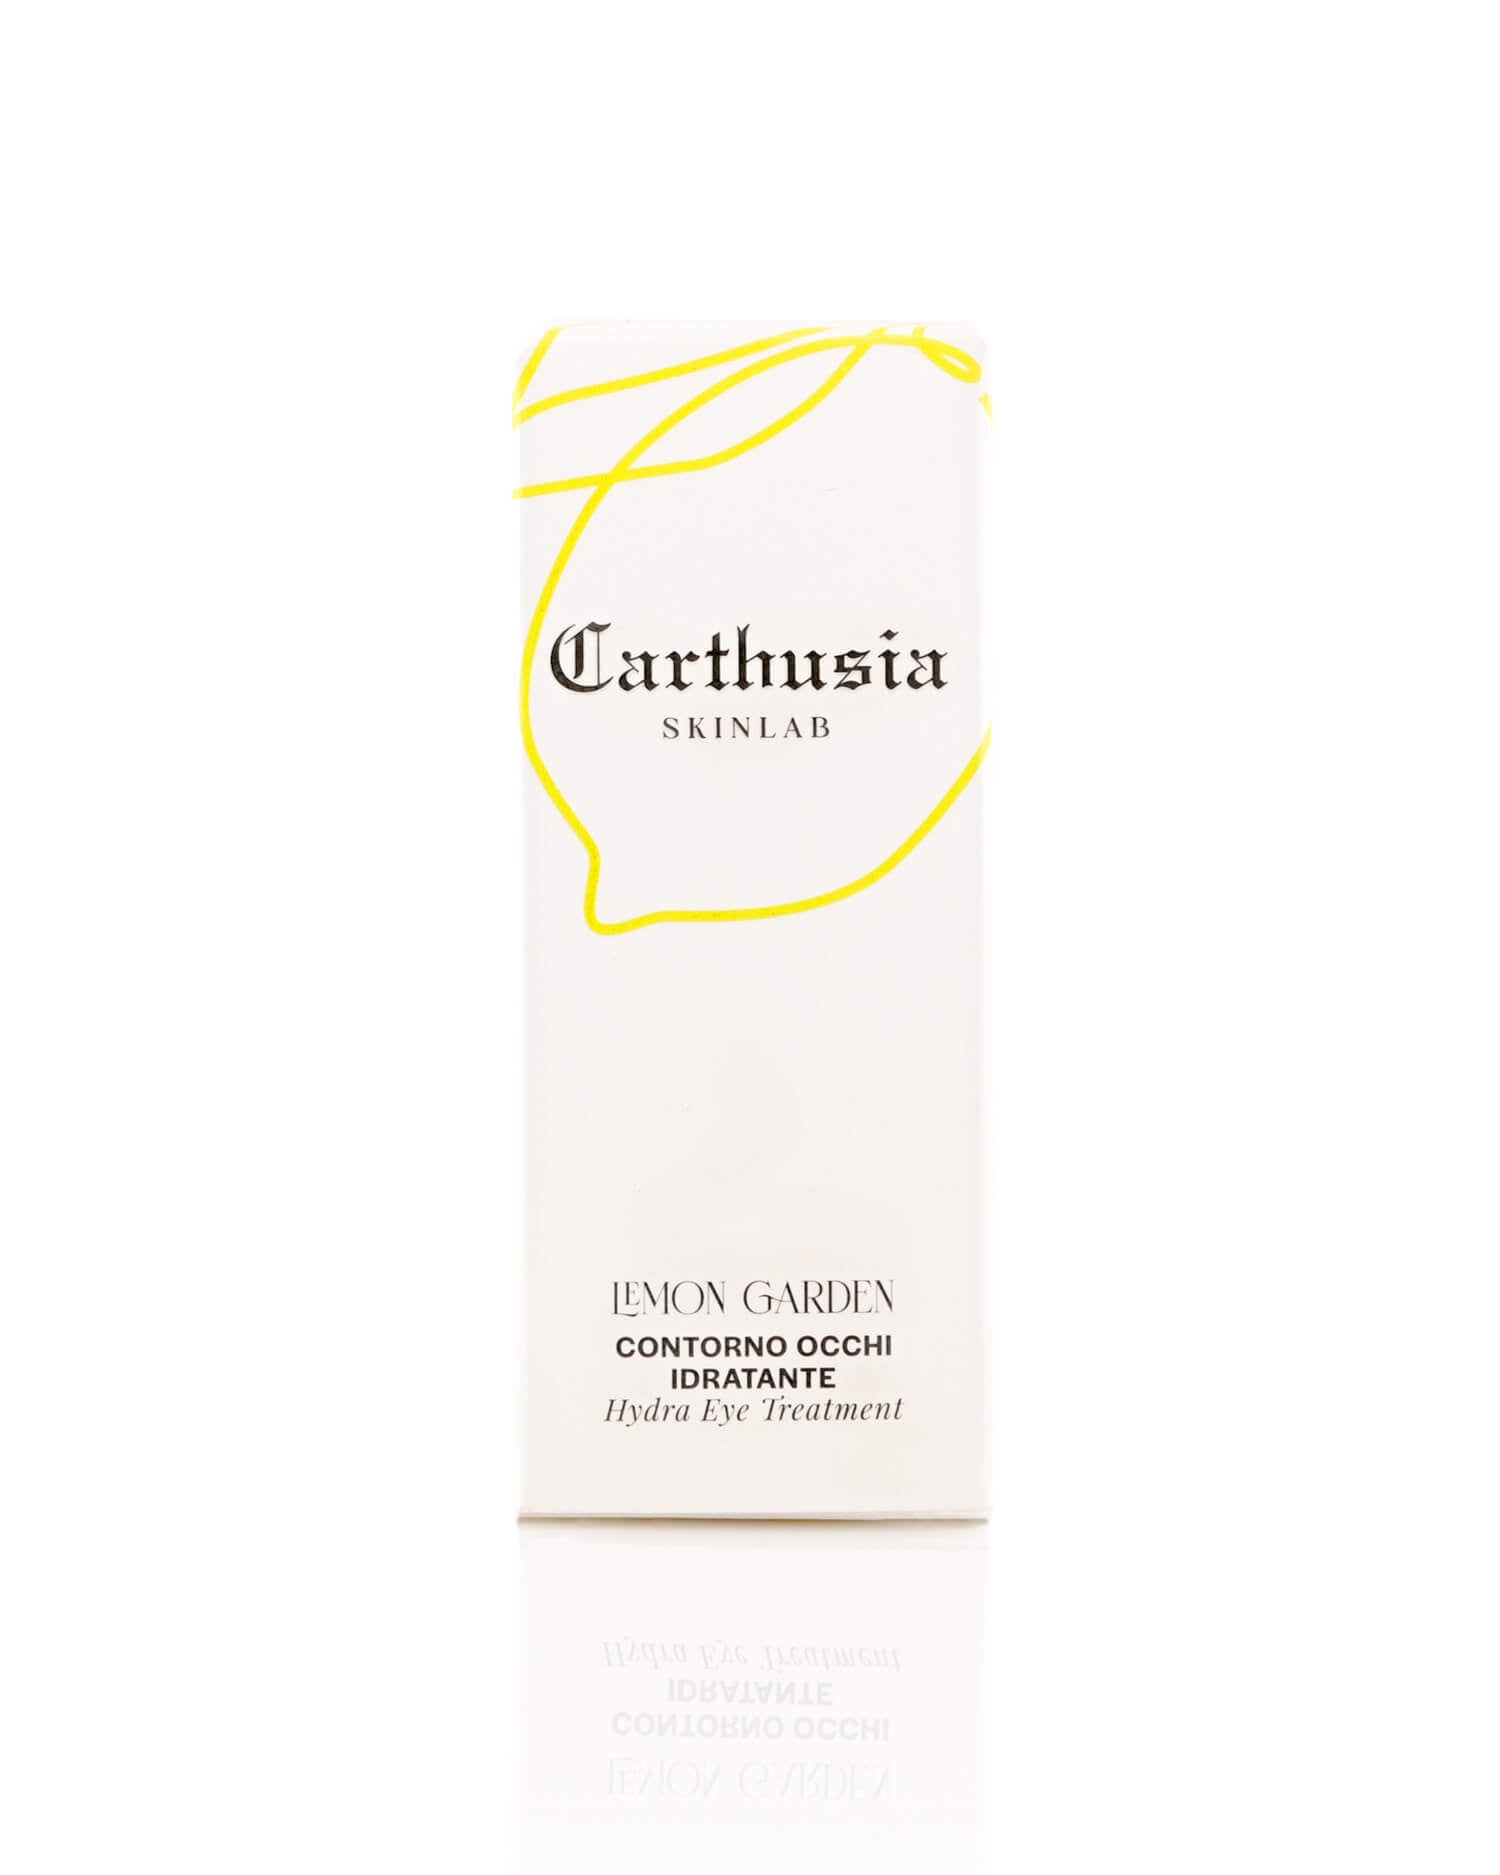 Carthusia Skinlab Lemon Garden Crema Contorno Occhi Idratante | RossoLacca 